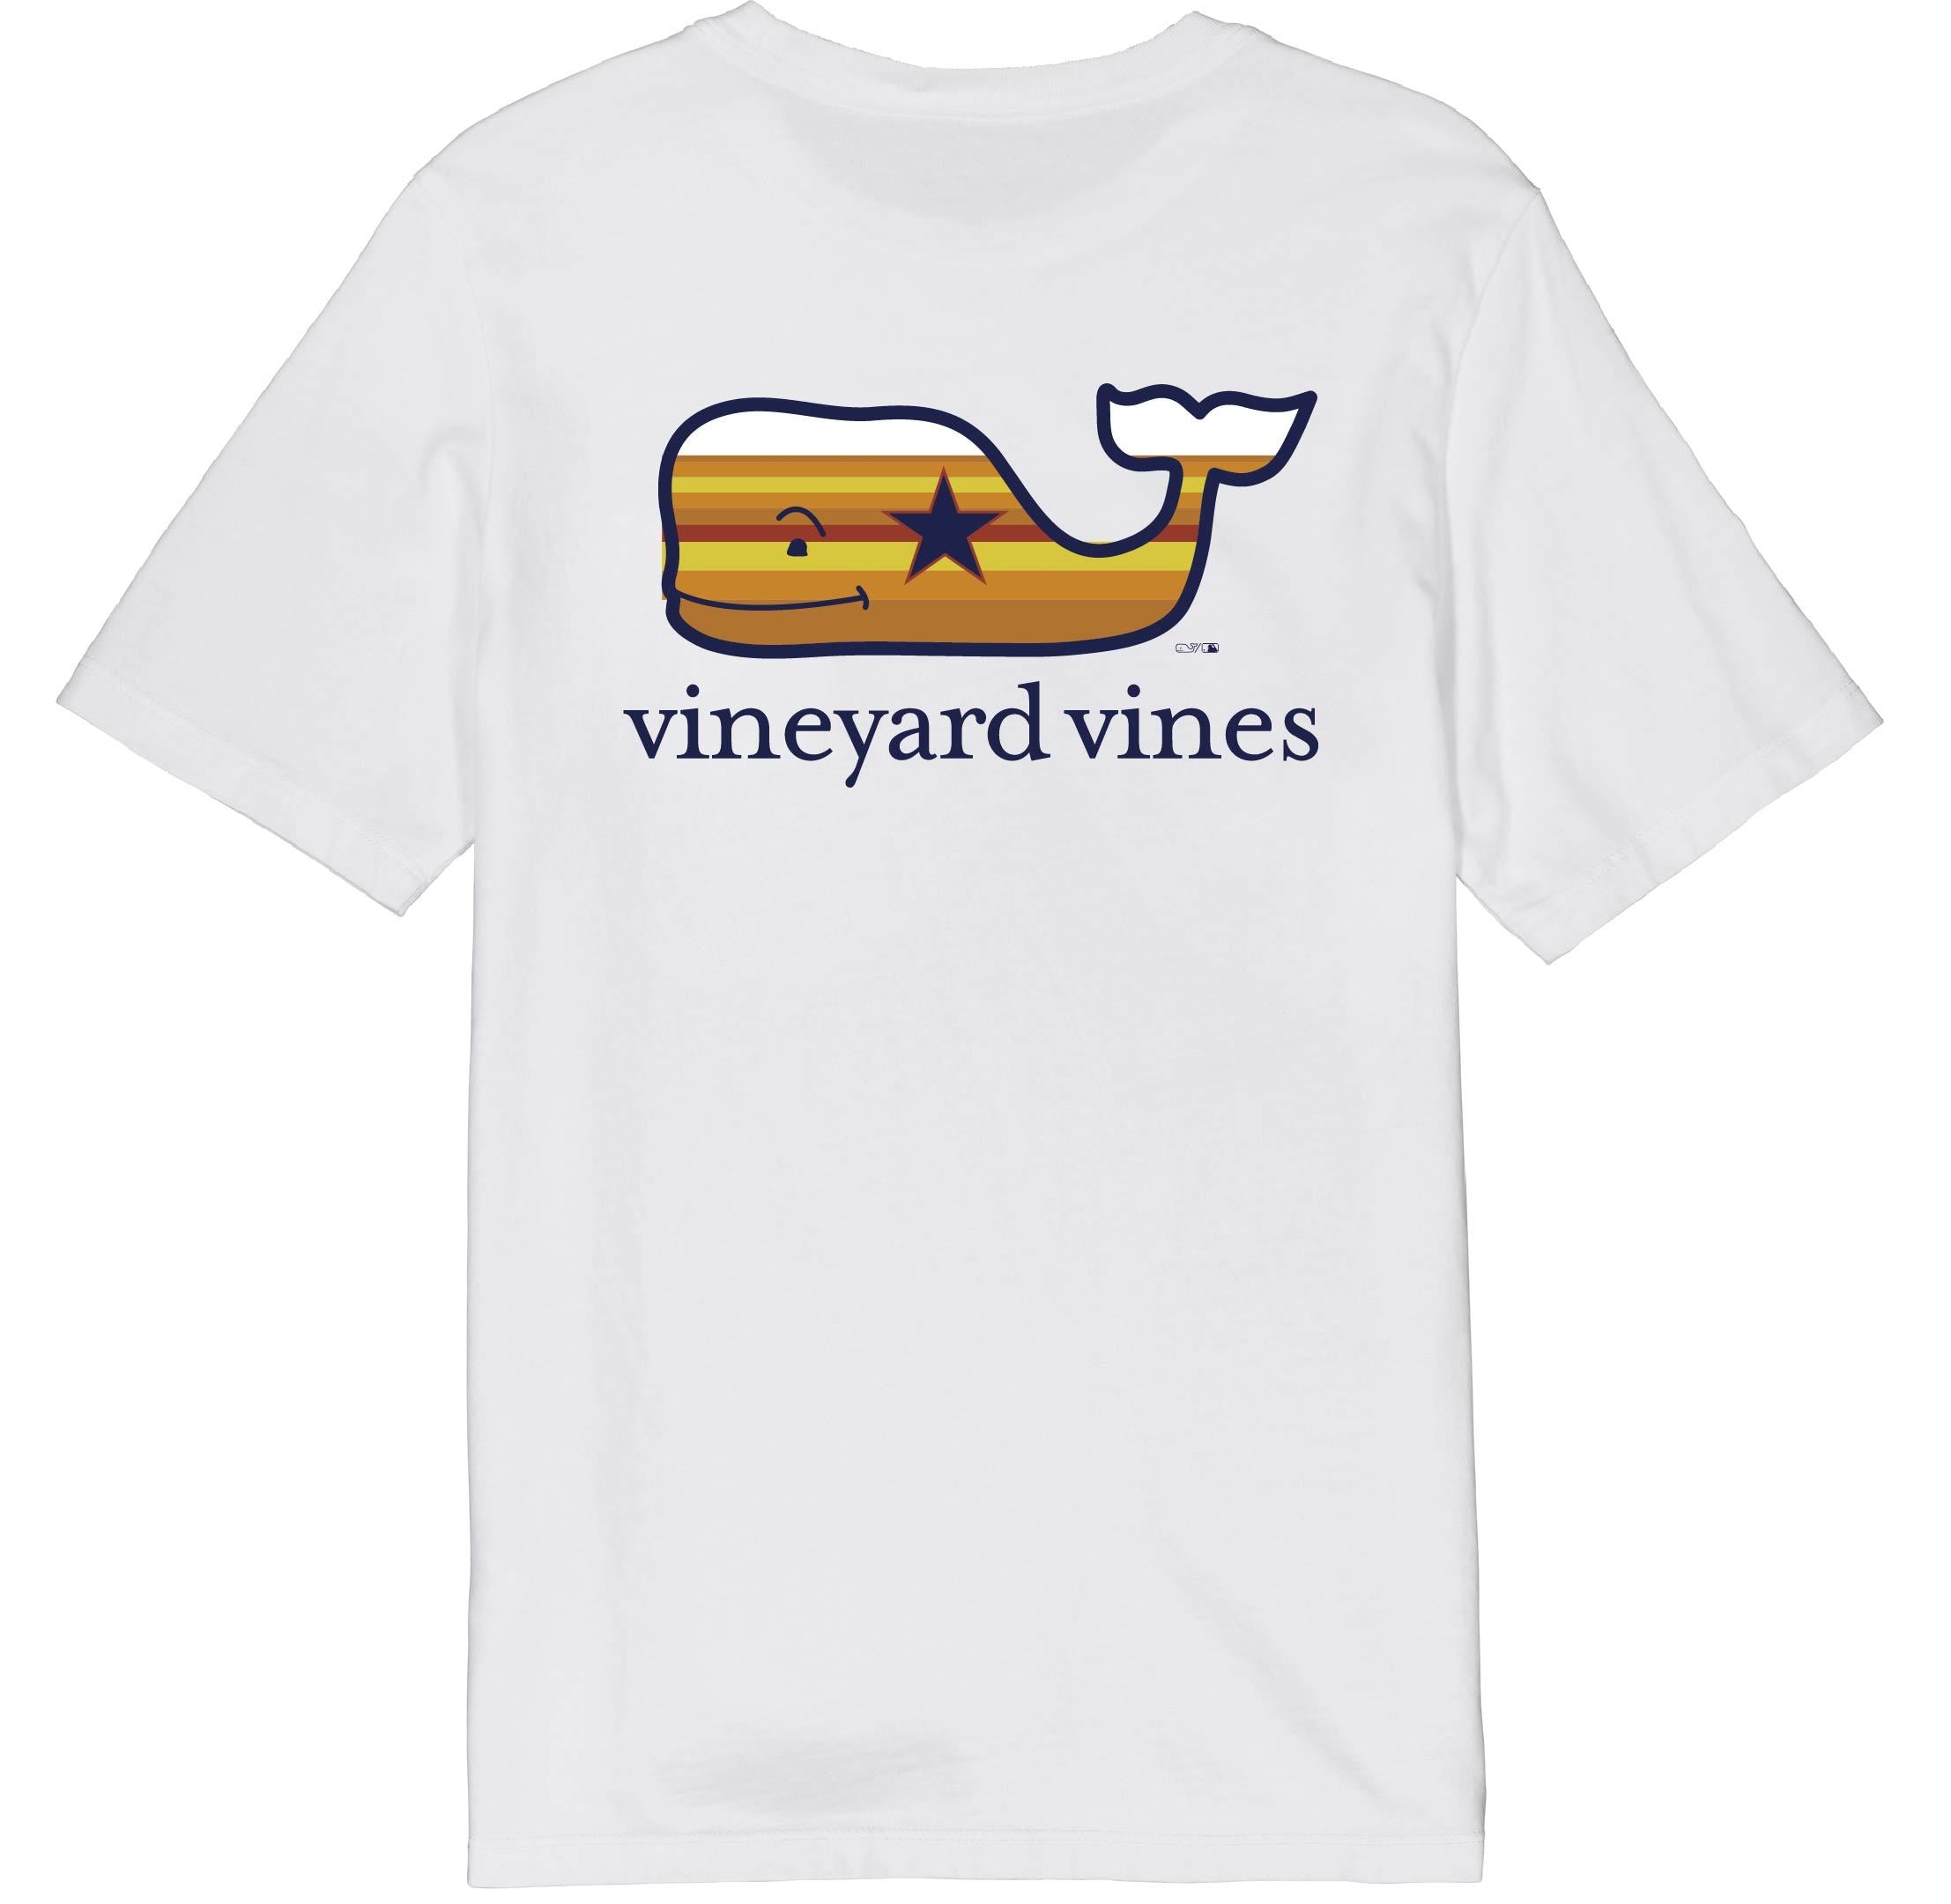 vineyard vines astros shirt